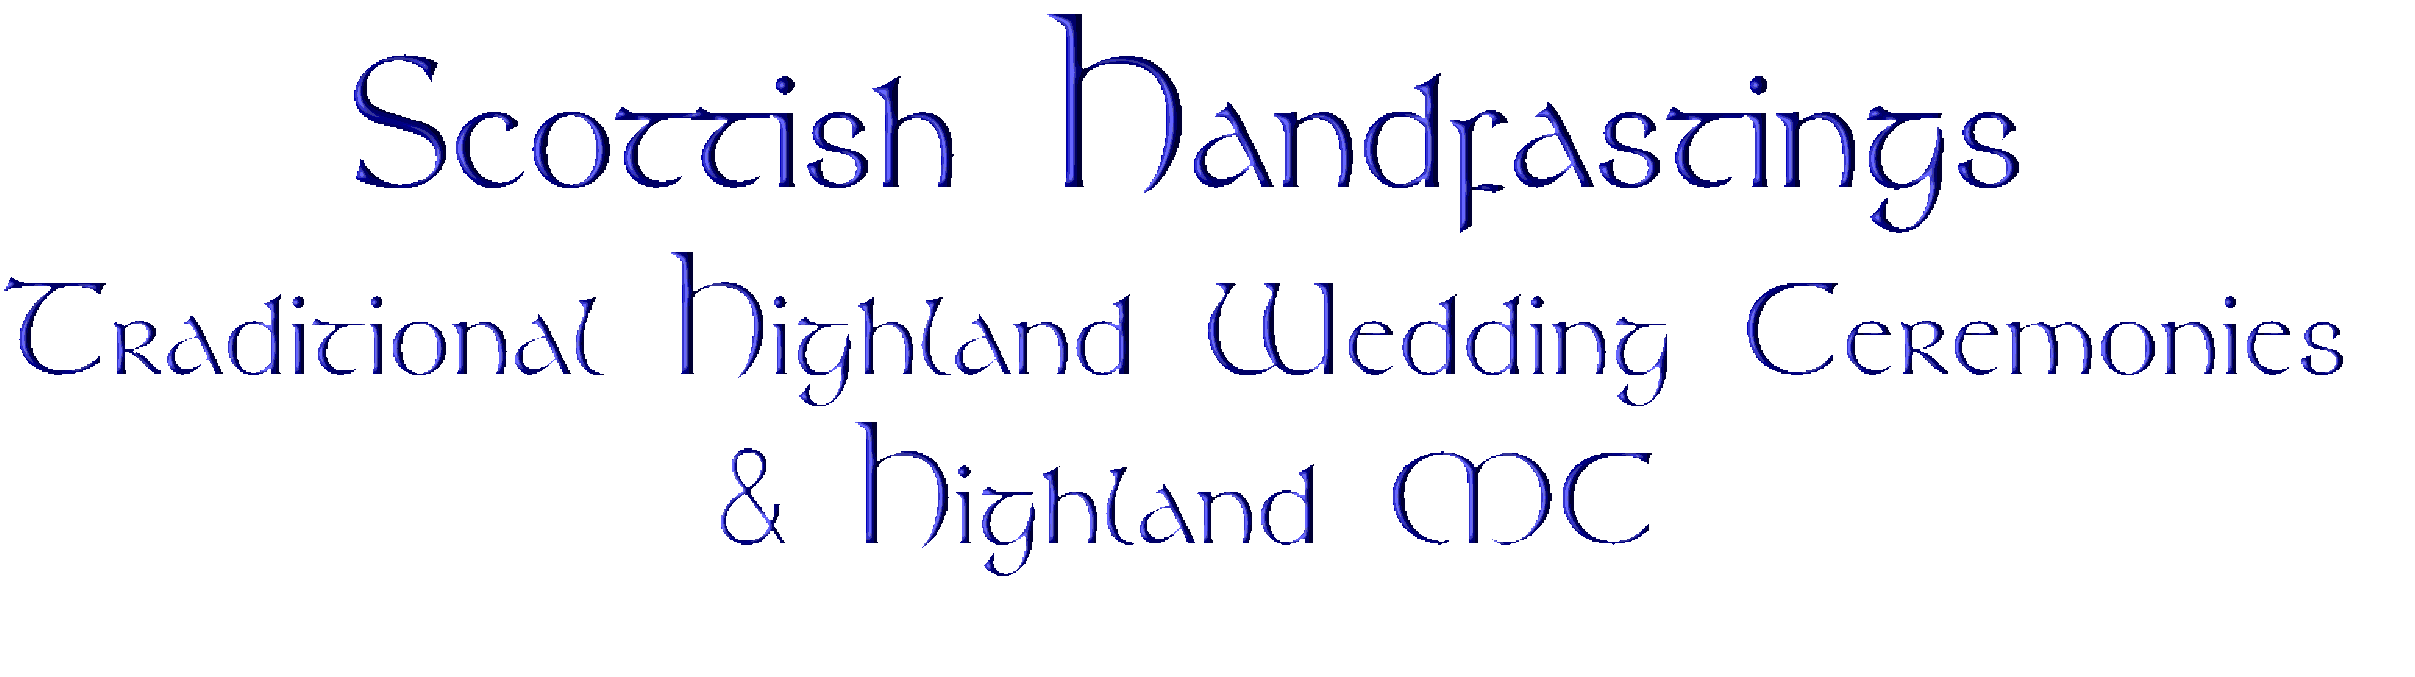 Title image of Scottish Handfasting